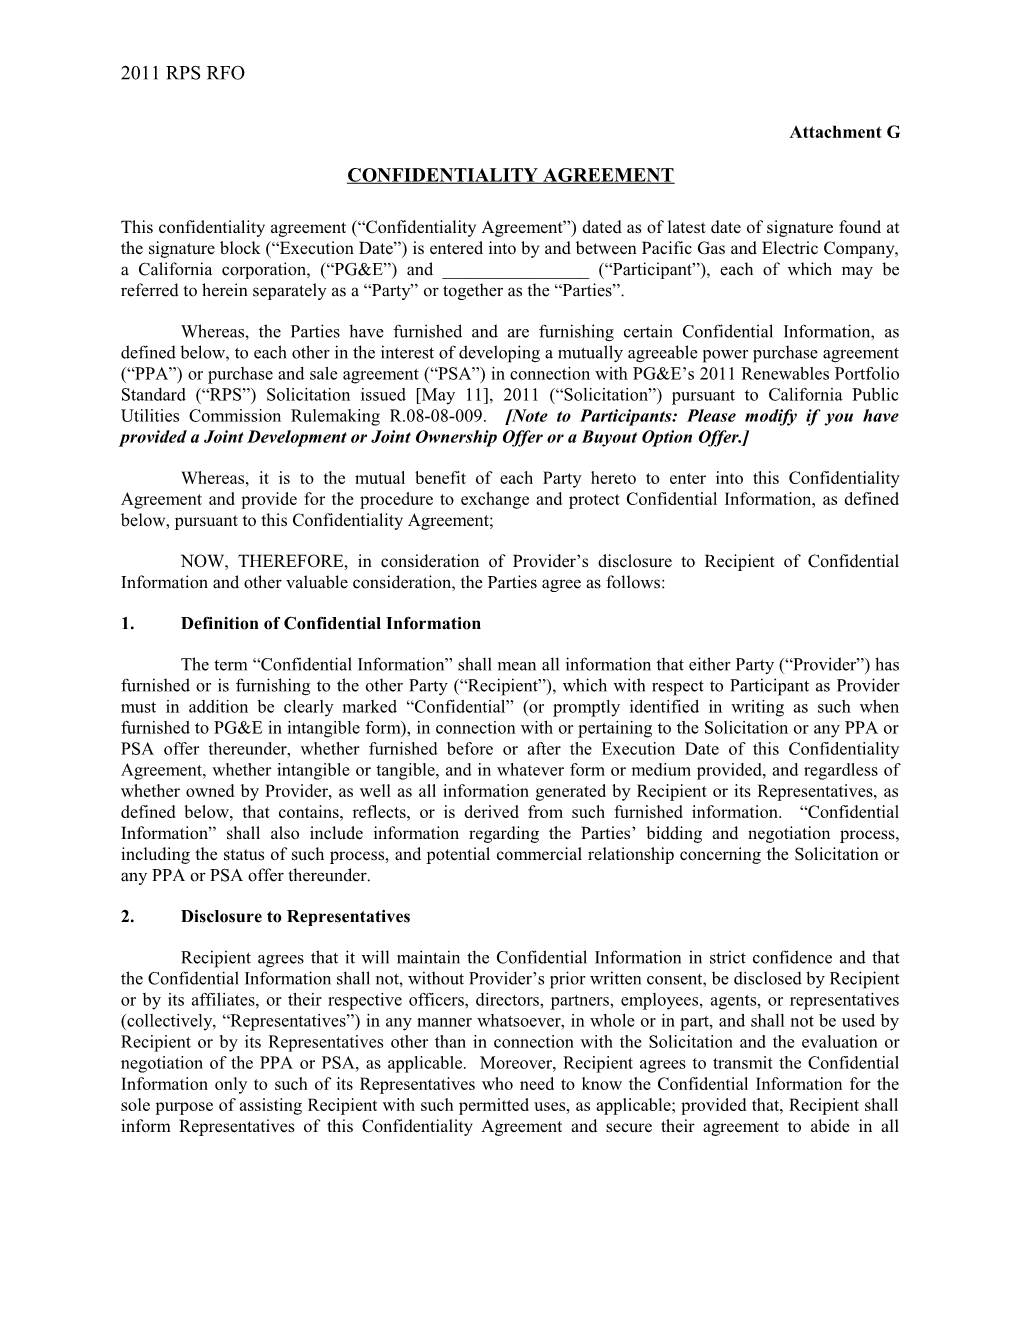 NDA - Confidentiality Agreement